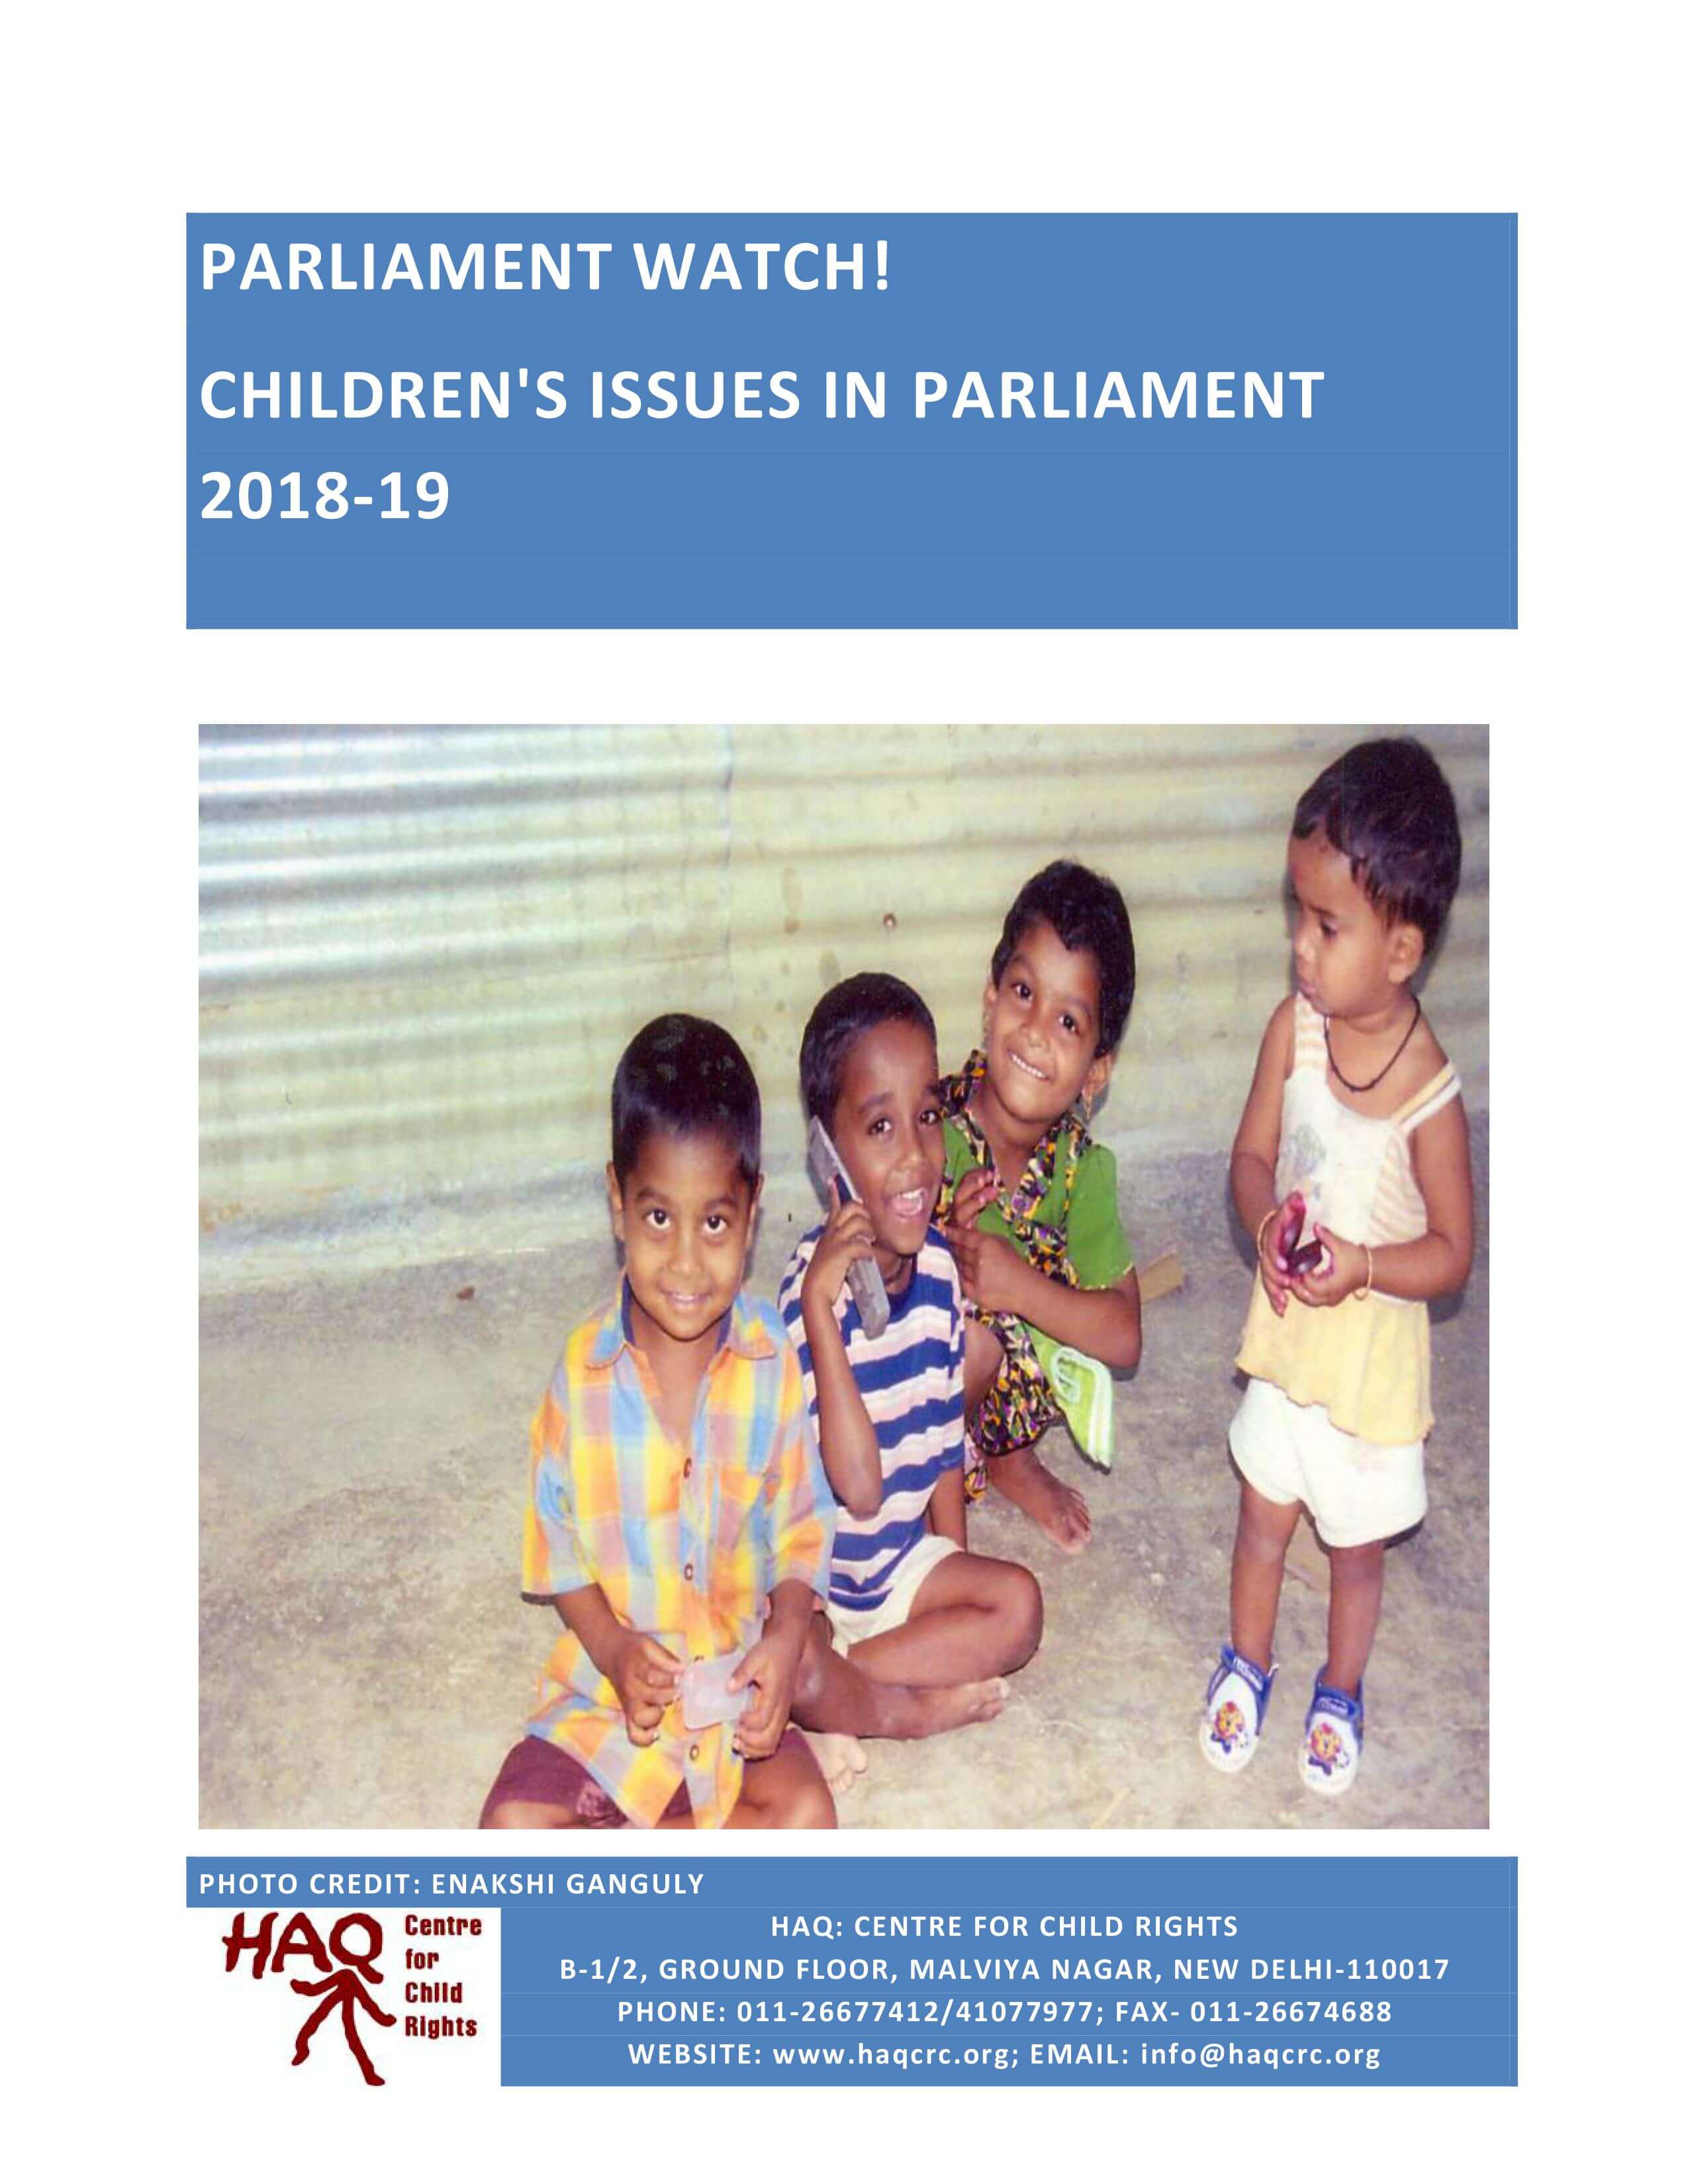 Parliament Watch! Children's Issues in Parliament 2018-19